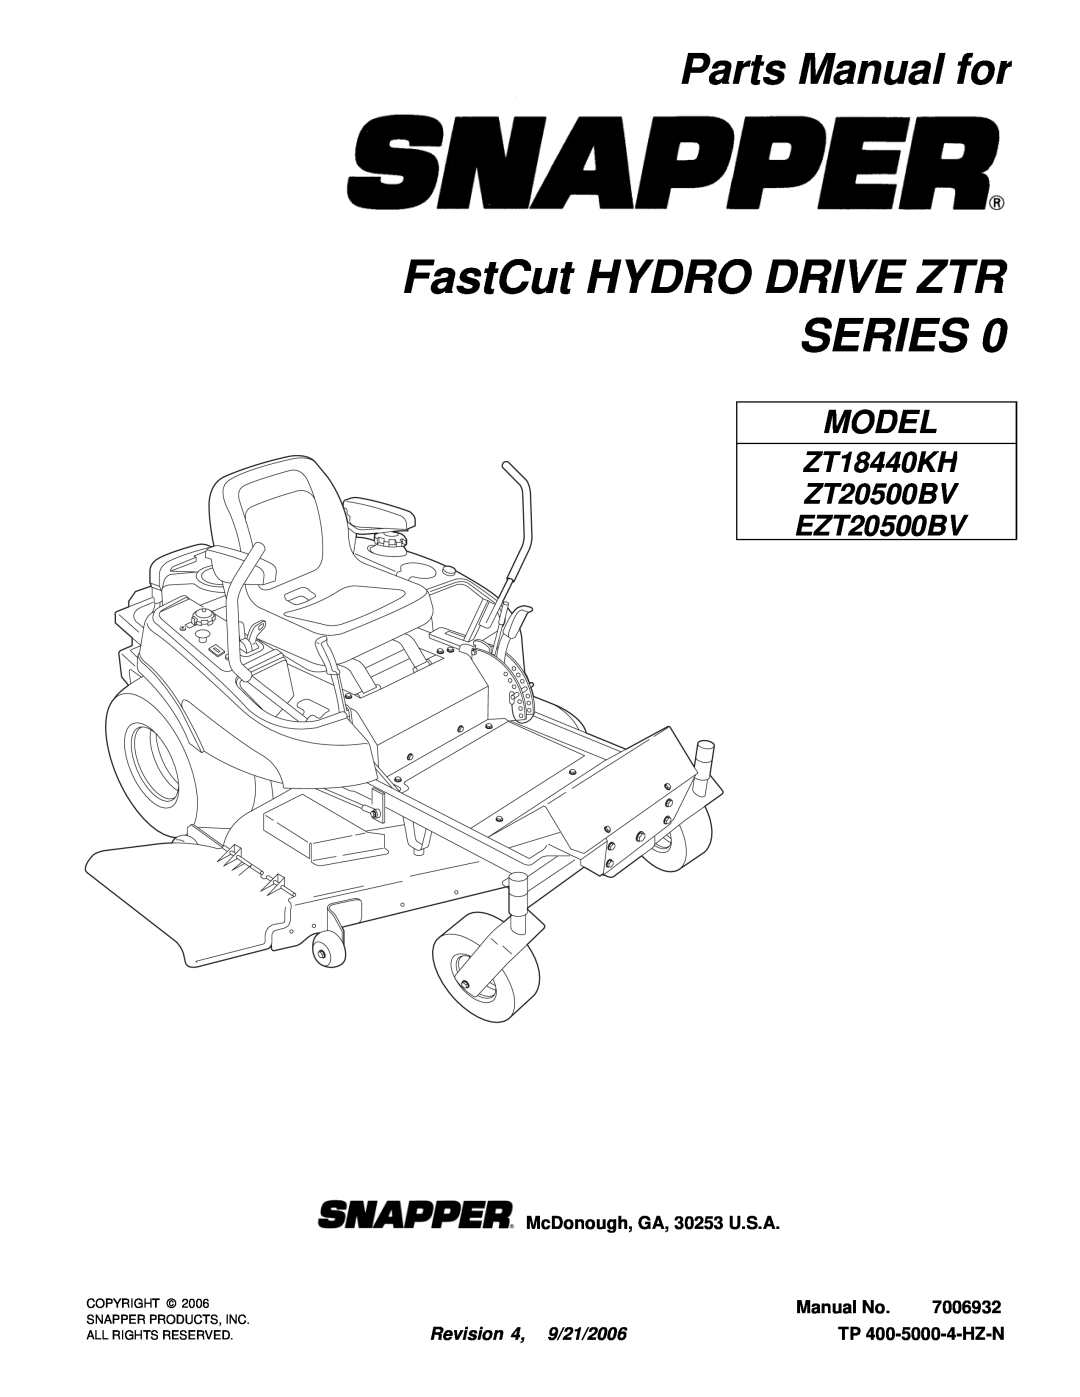 Snapper manual Parts Manual for, FastCut HYDRO DRIVE ZTR SERIES, Model, ZT18440KH ZT20500BV EZT20500BV, Manual No 